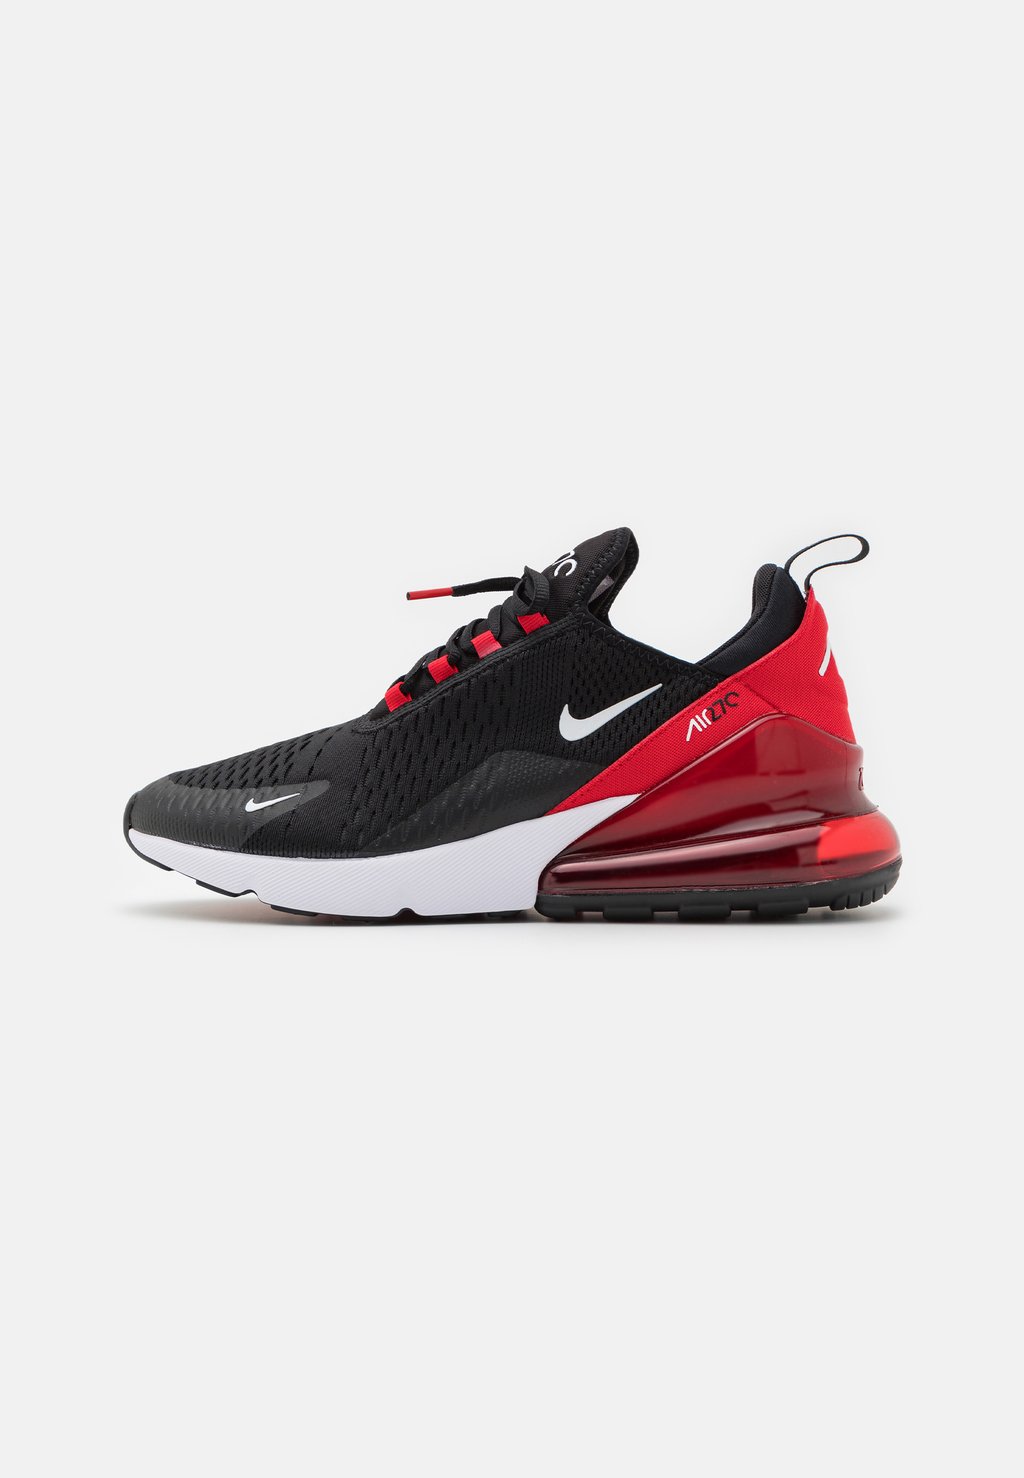 Низкие кроссовки Air Max 270 Nike, цвет black/white/university red/anthracite